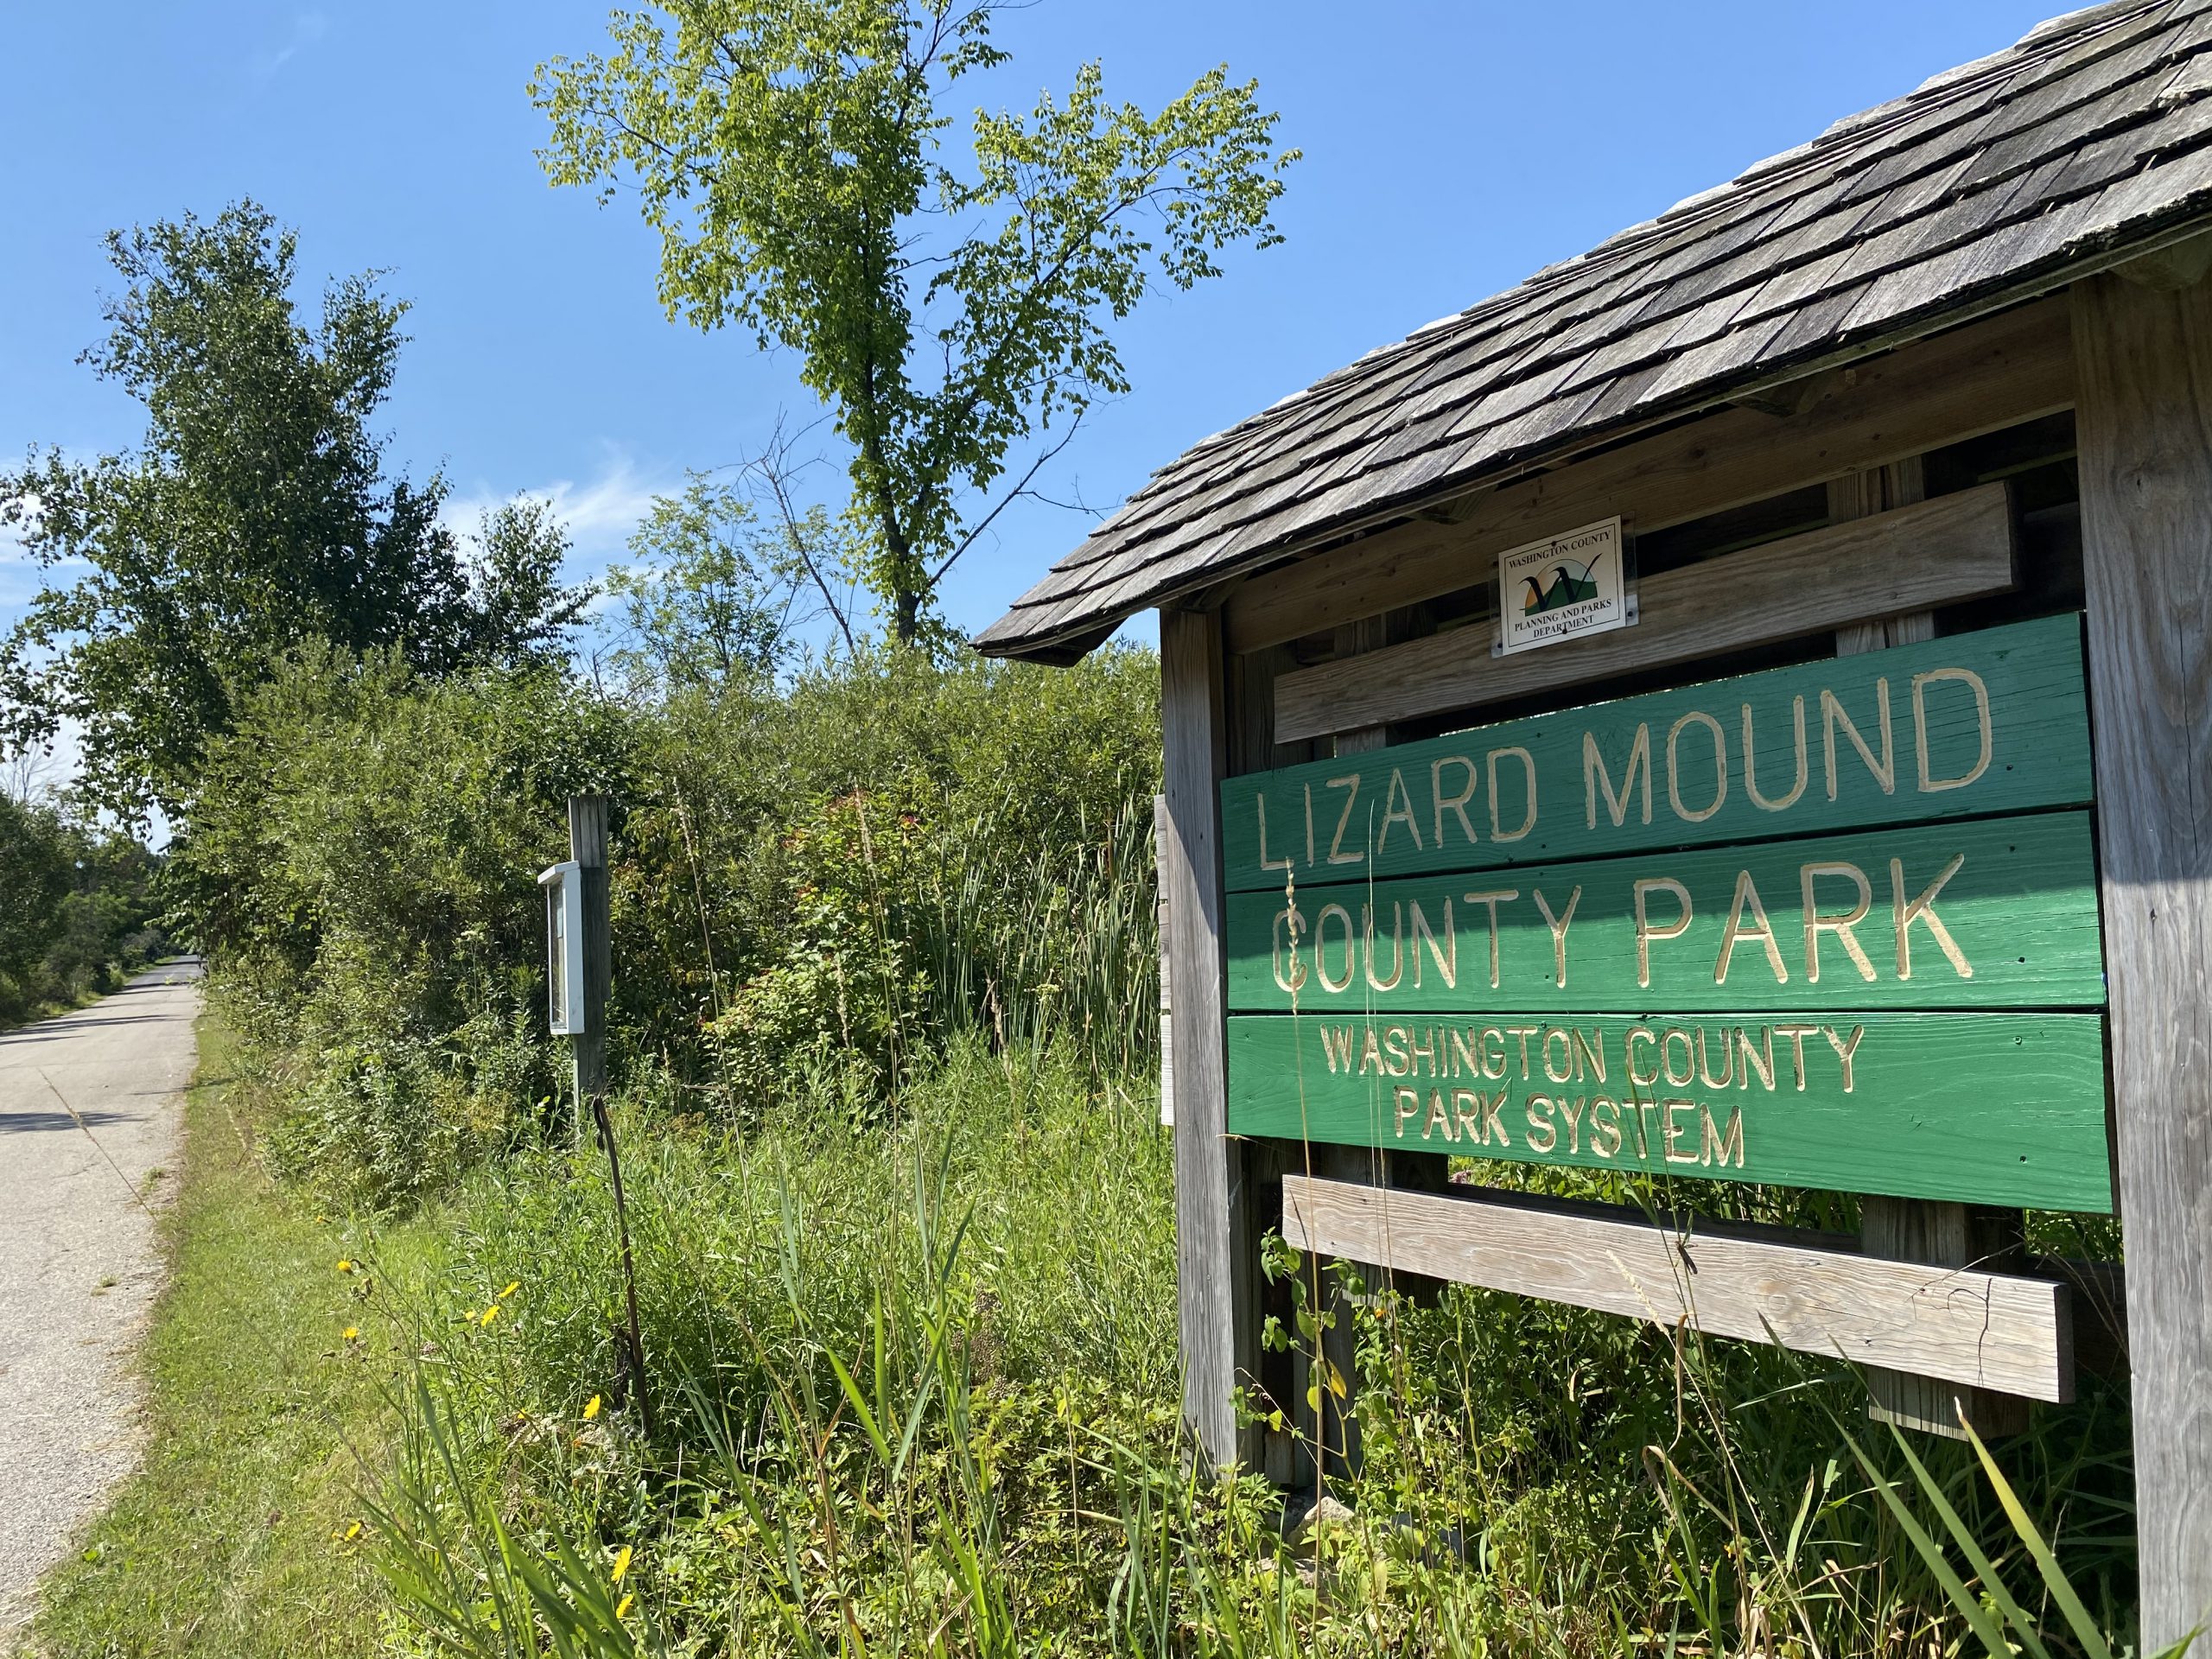 Lizard mound